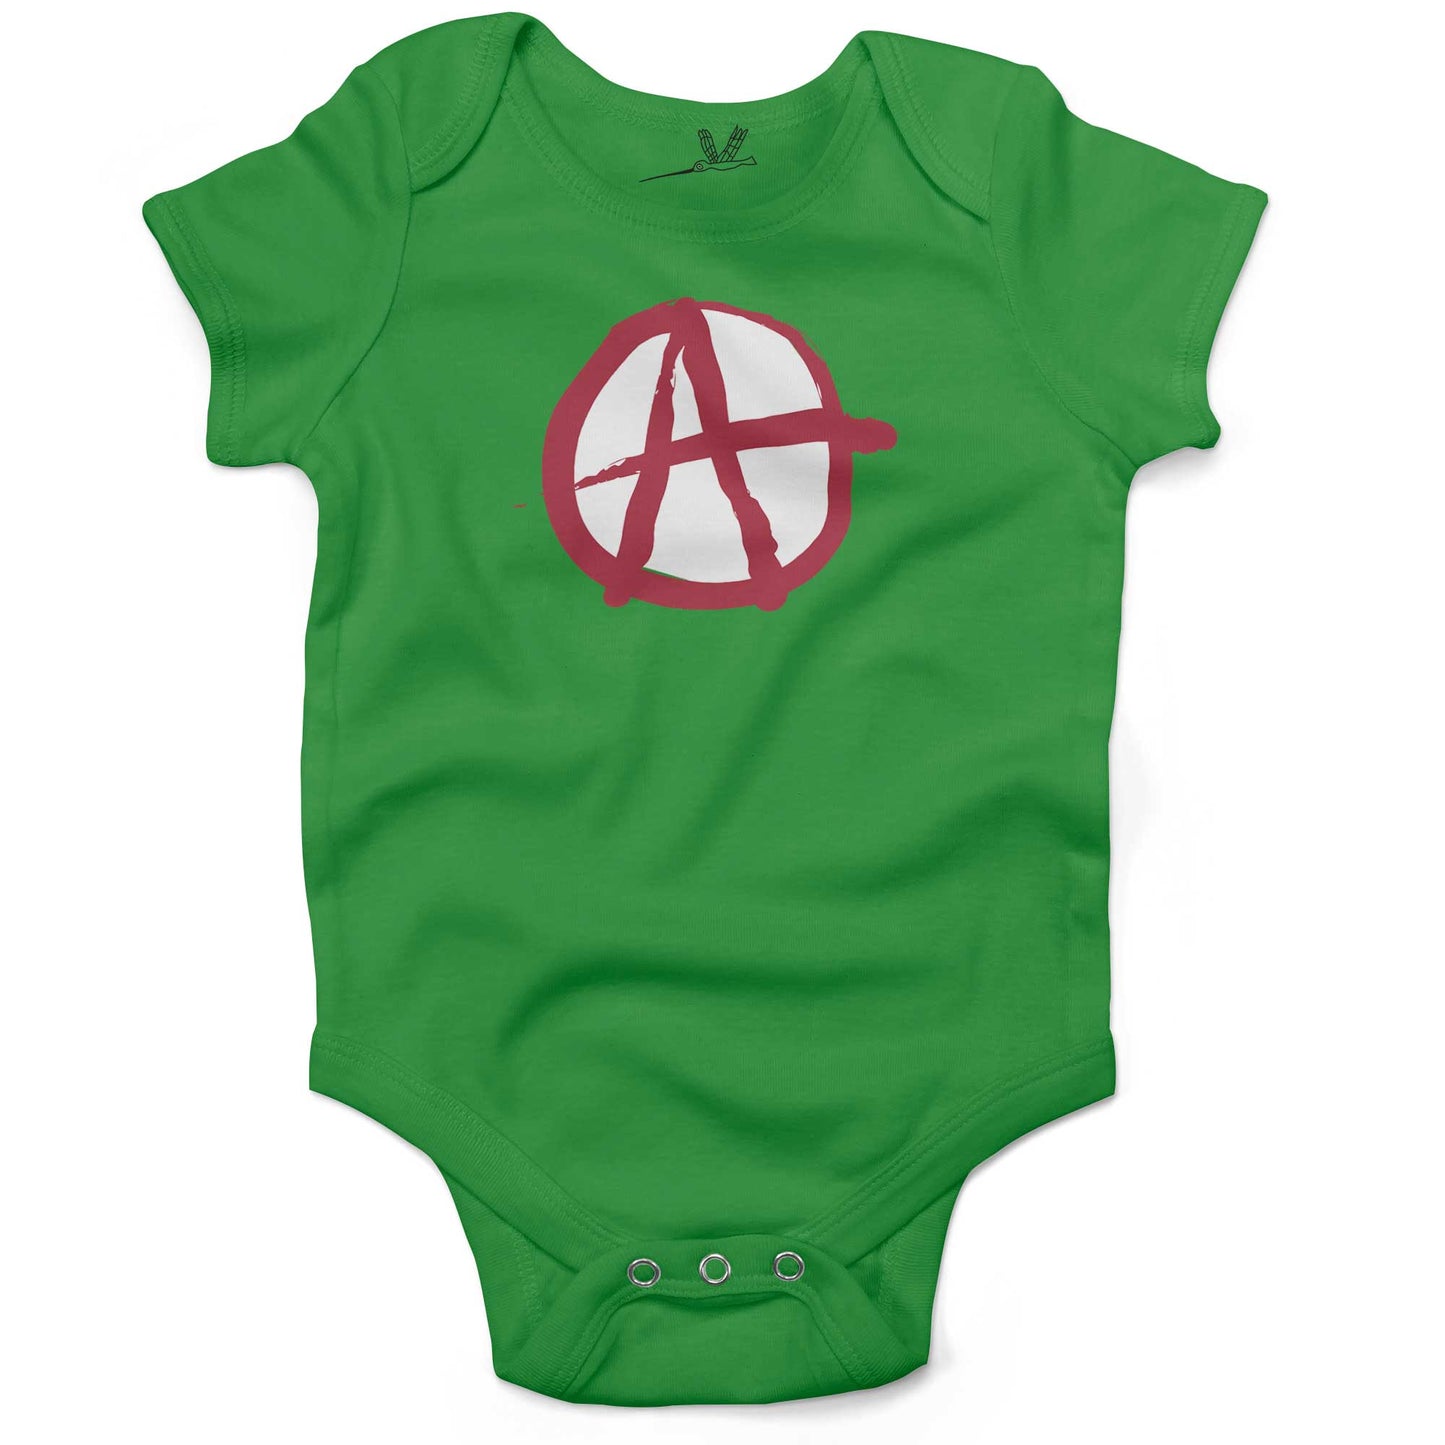 Anarchy Symbol Infant Bodysuit or Raglan Tee-Grass Green-3-6 months